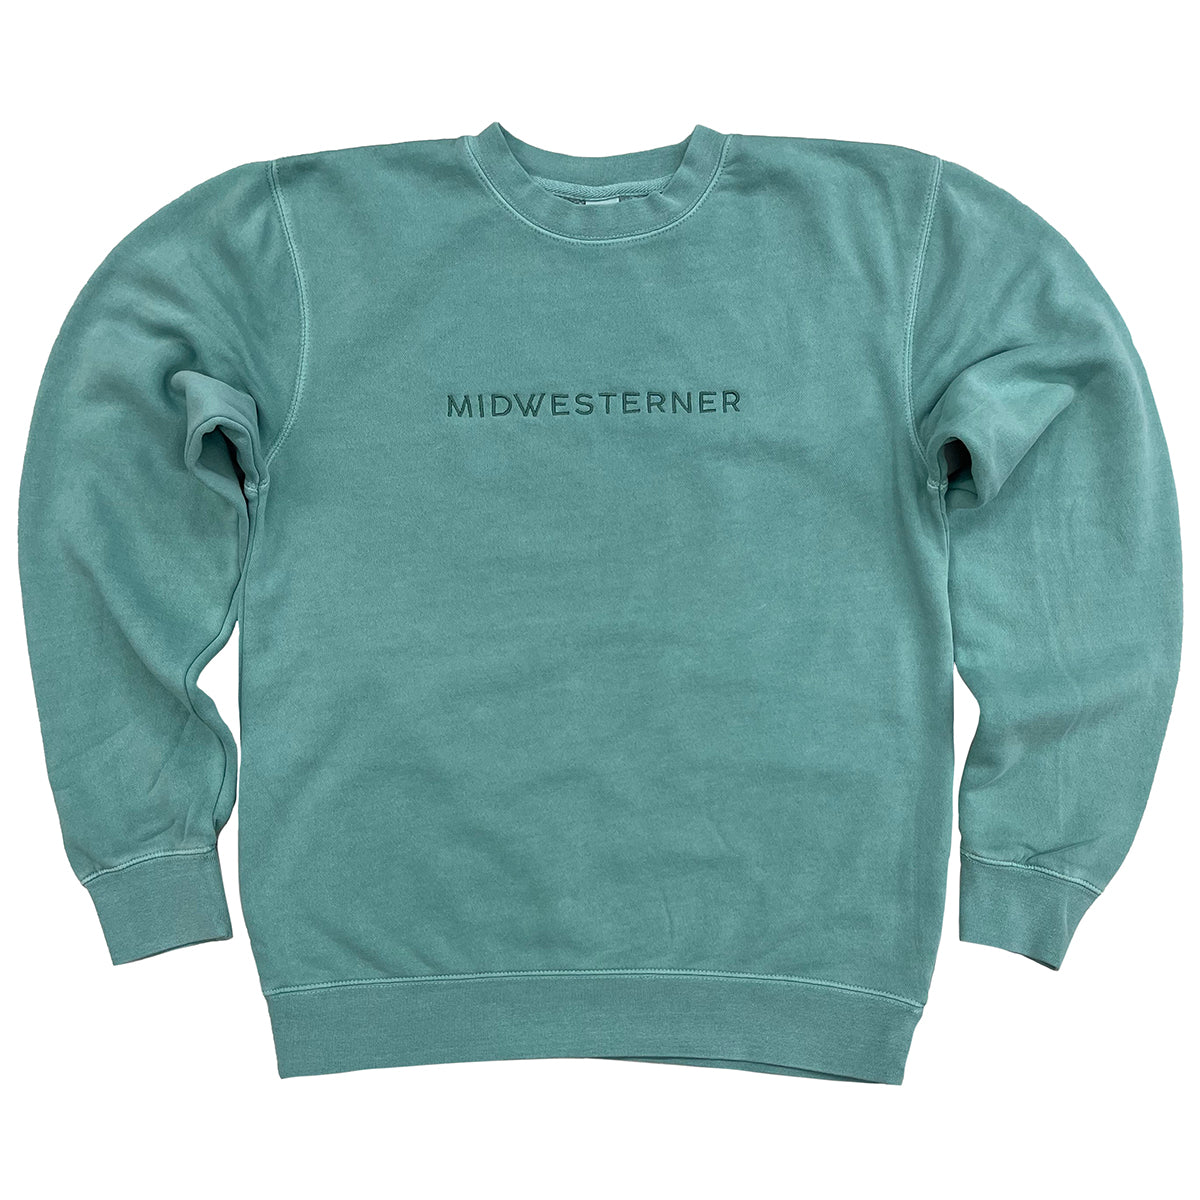 Jupmode Midwesterner Embroidered Crew Sweatshirt